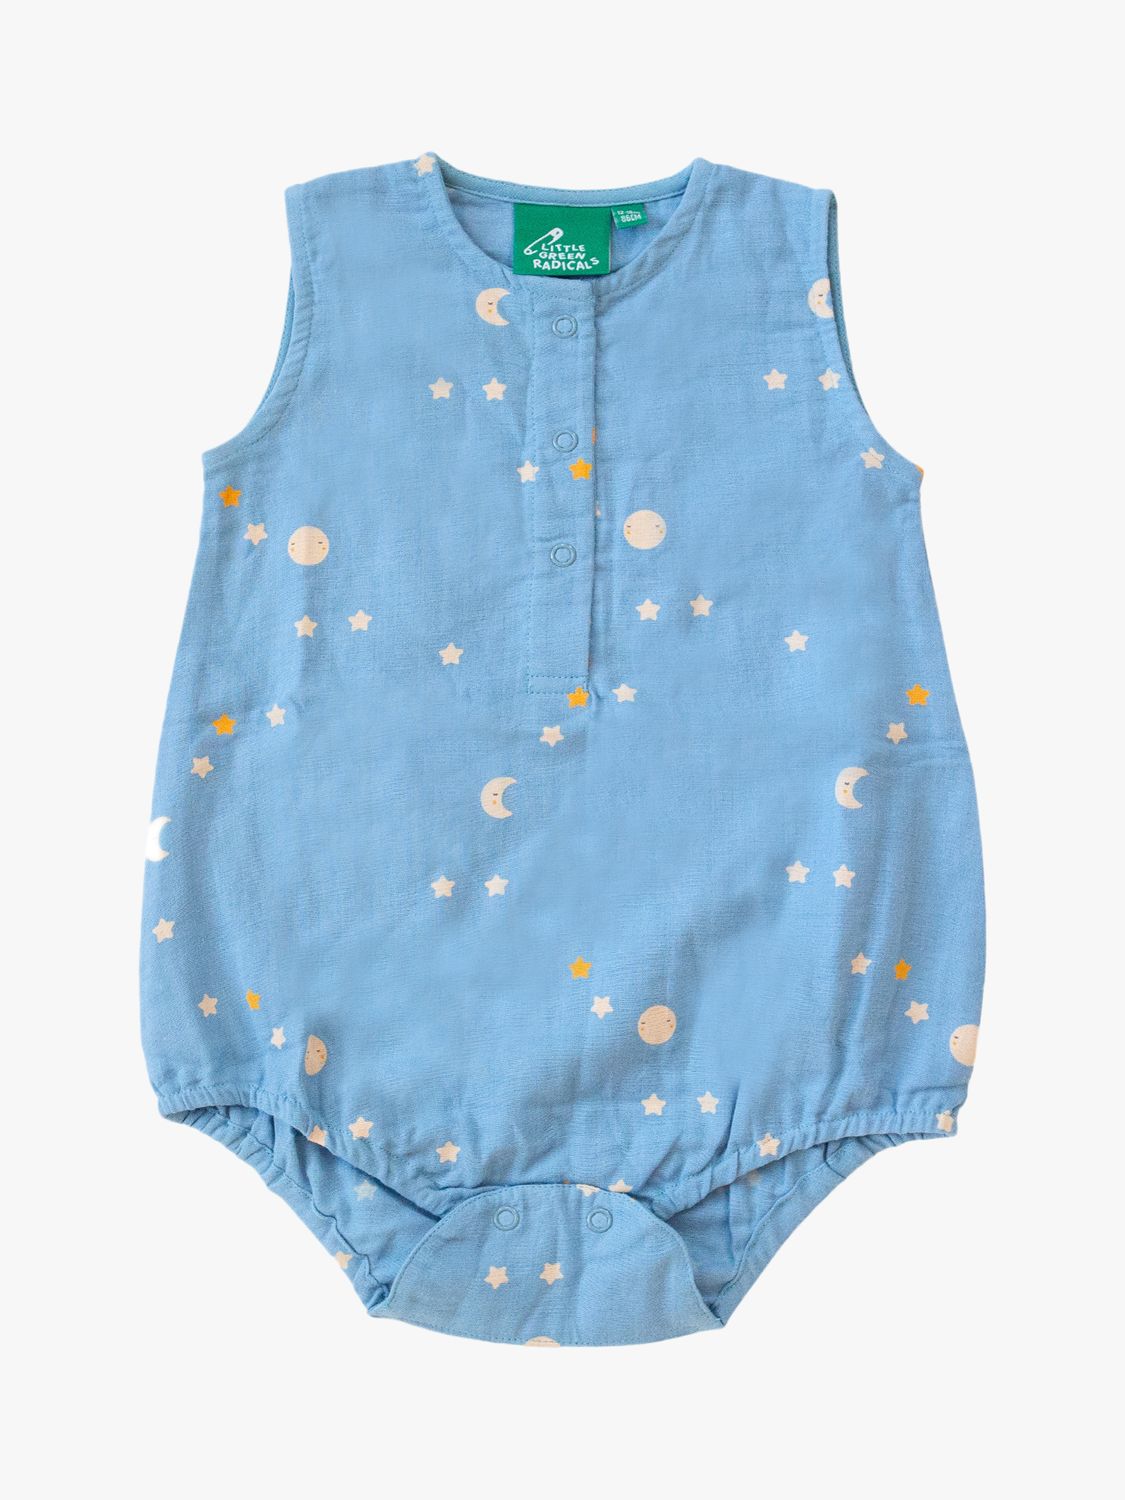 Little Green Radicals Baby Organic Cotton Dawn Bubble Bodysuit, Blue/Multi, 3-6 months